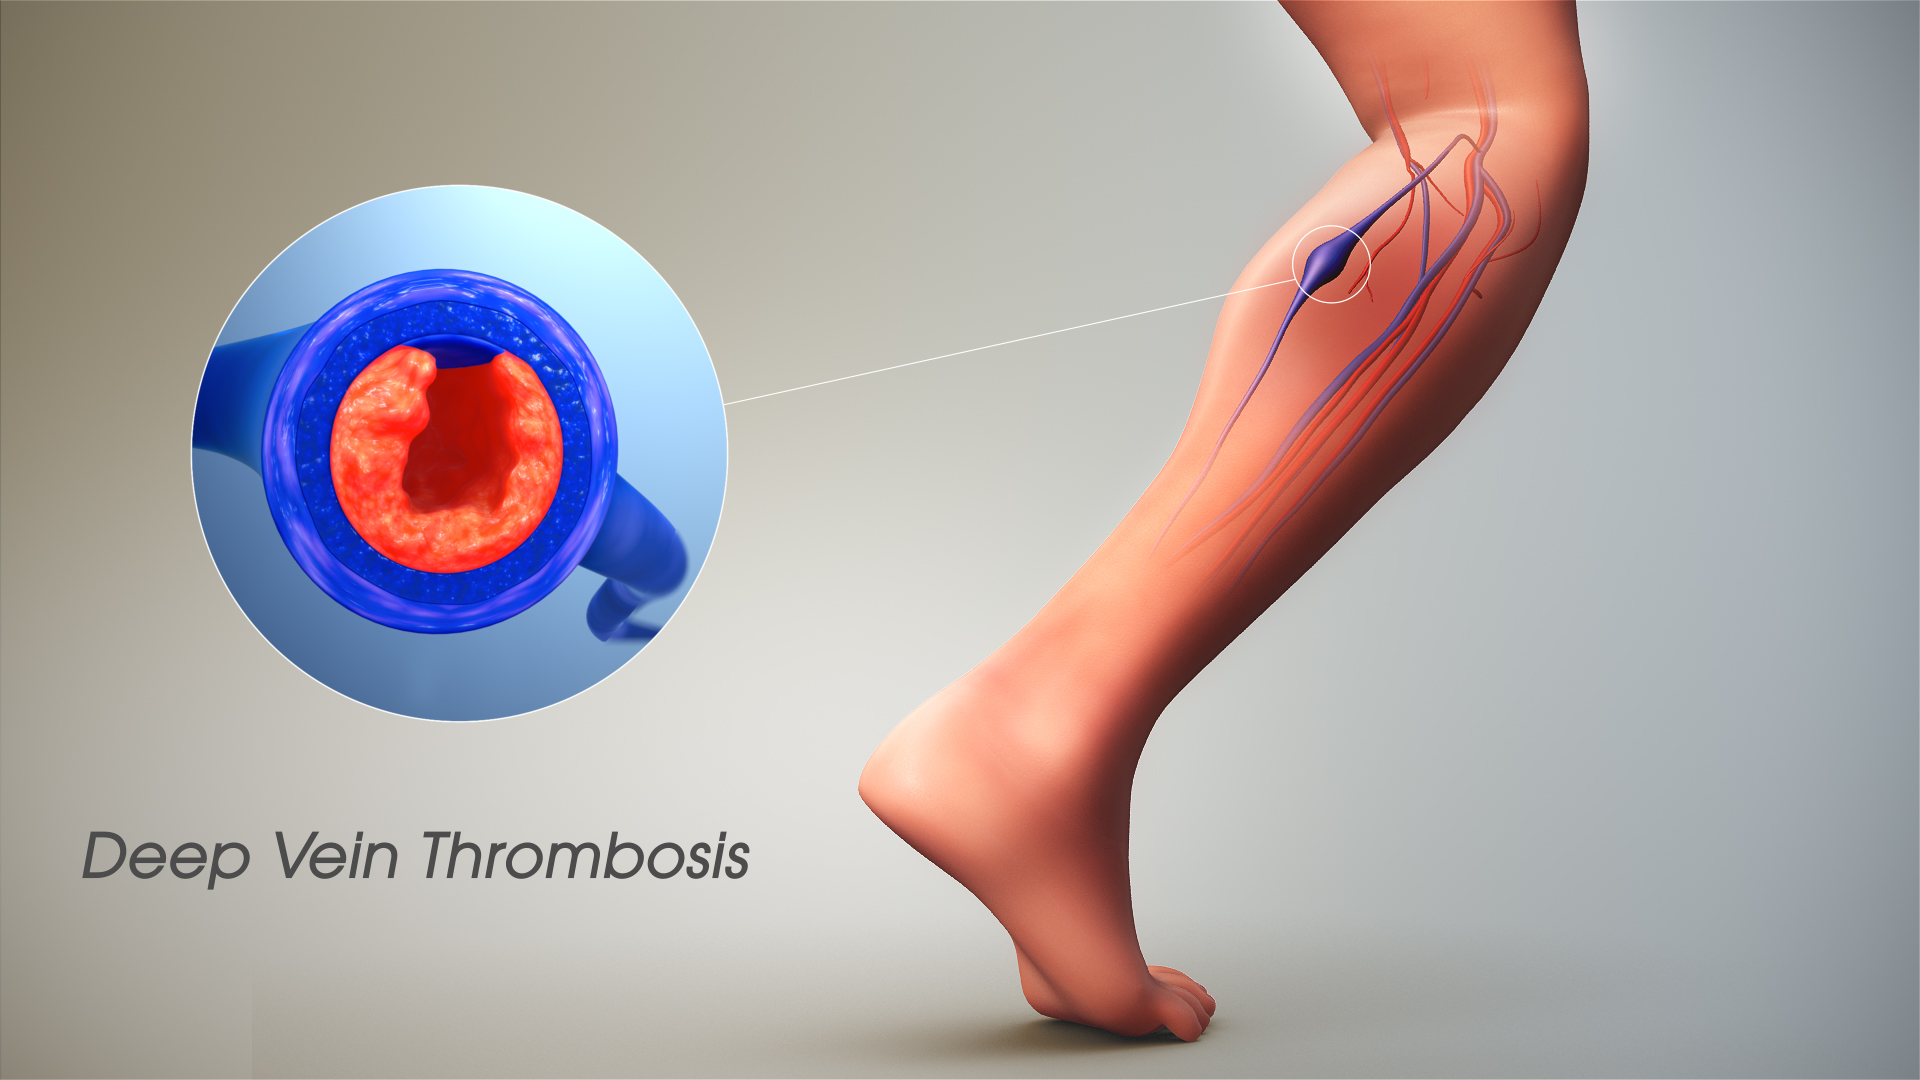 Deep vein thrombosis: life threatening but preventable